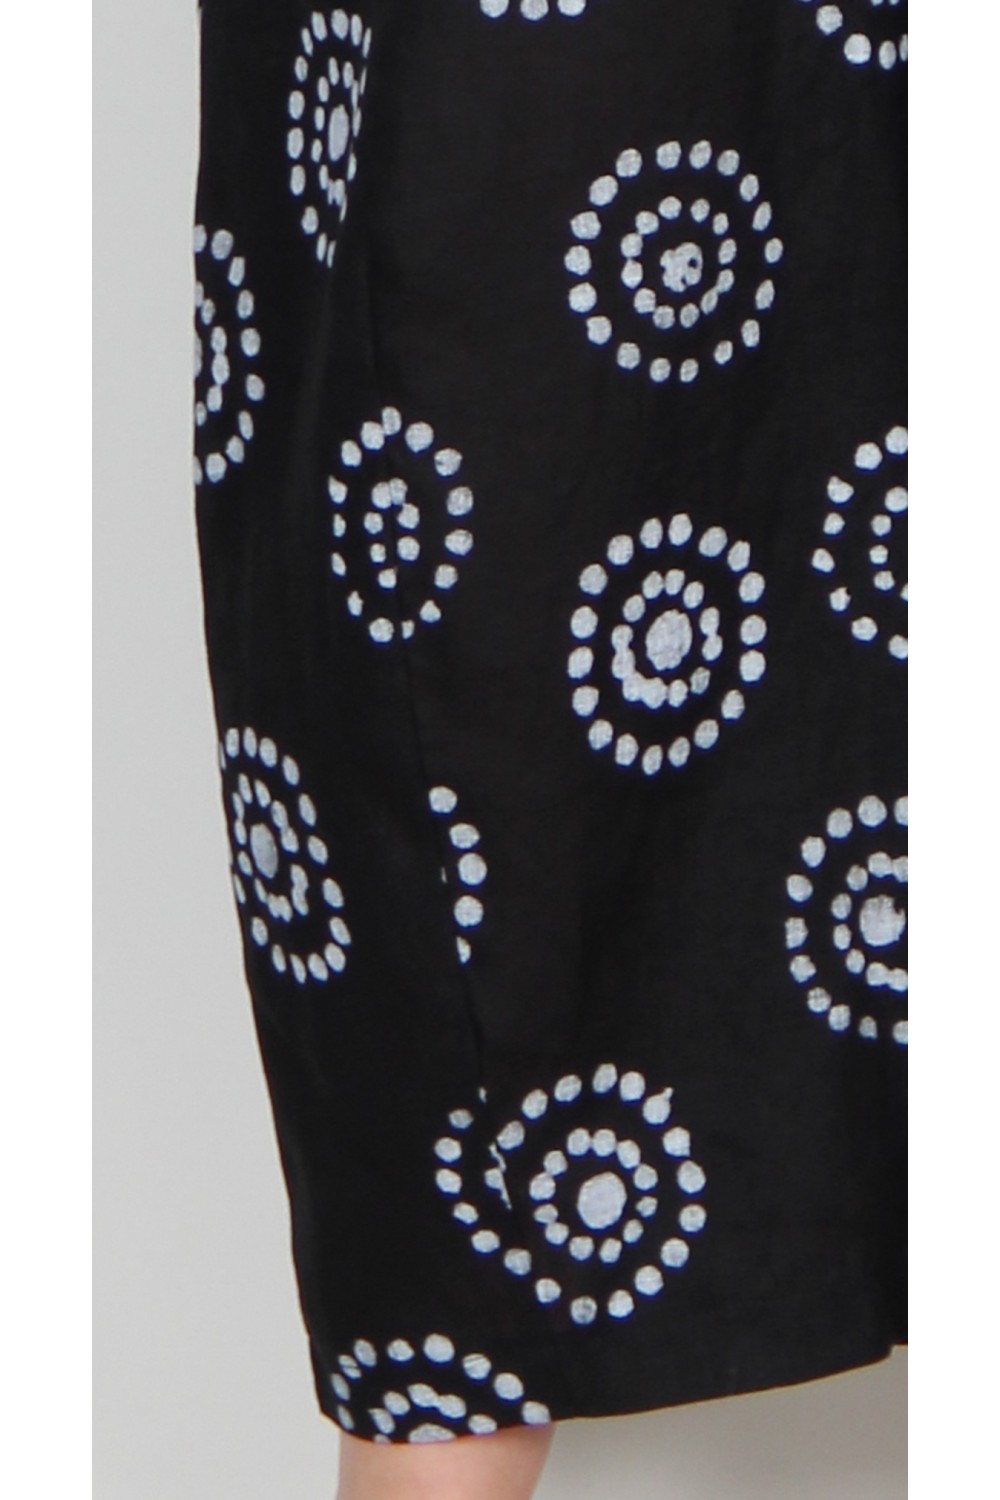 Neirami Spot Circle Print Linen Trousers Black/White